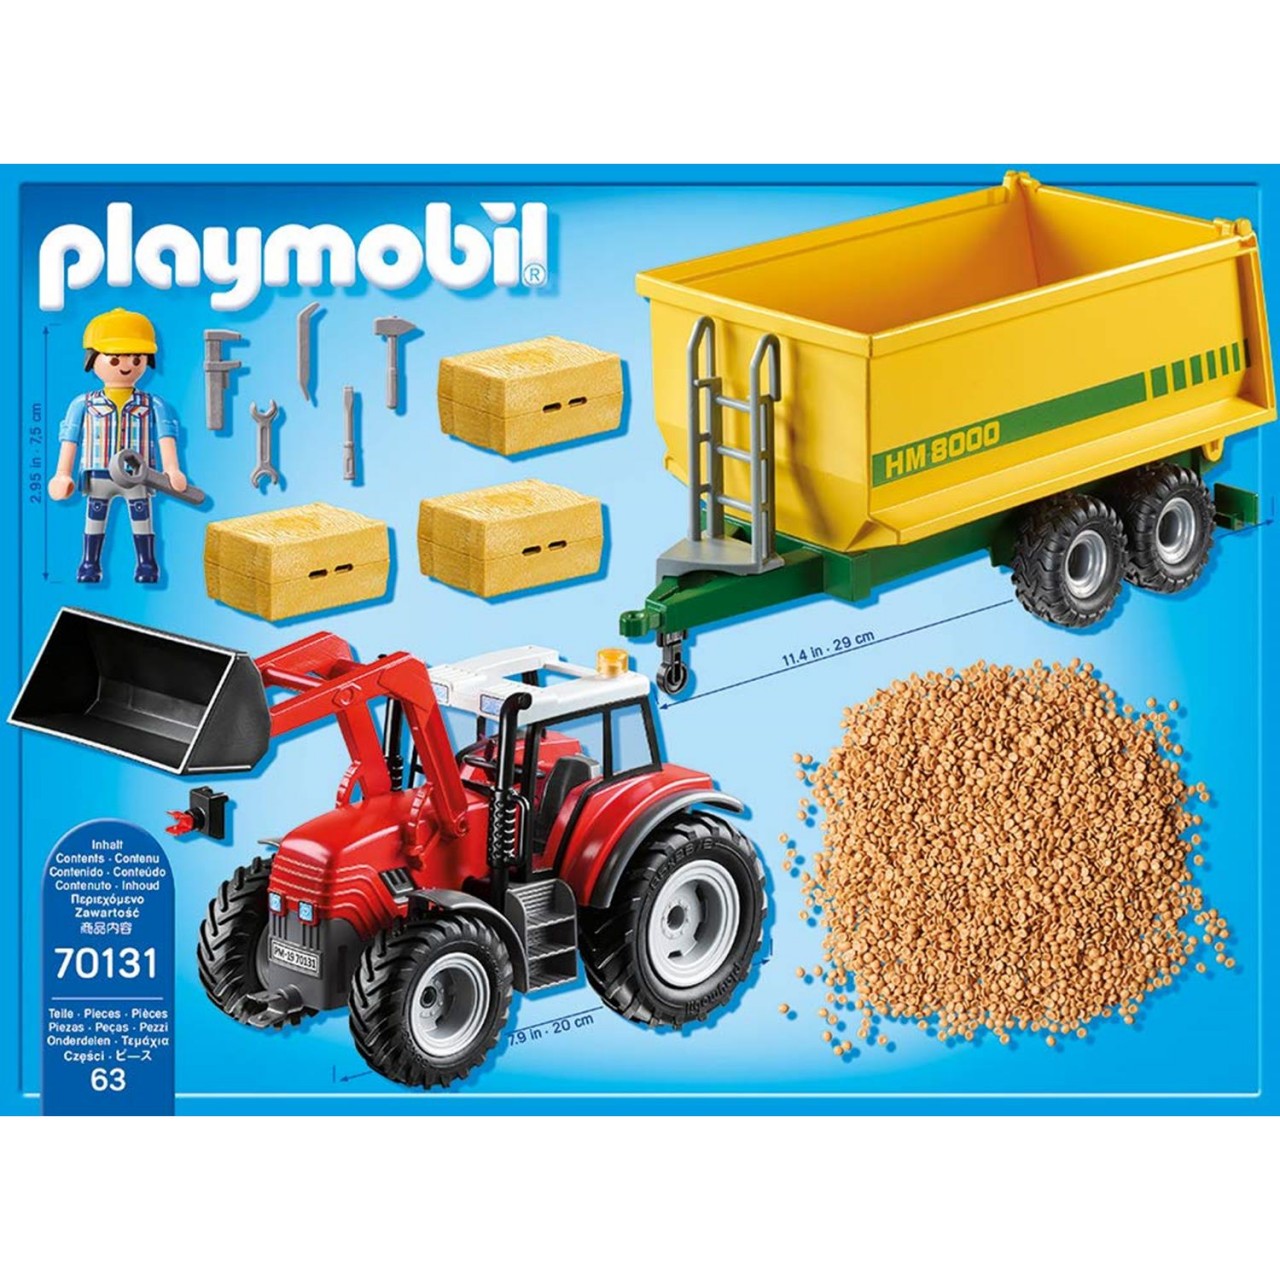 Playmobil 70131 Riesentraktor mit Anhänger